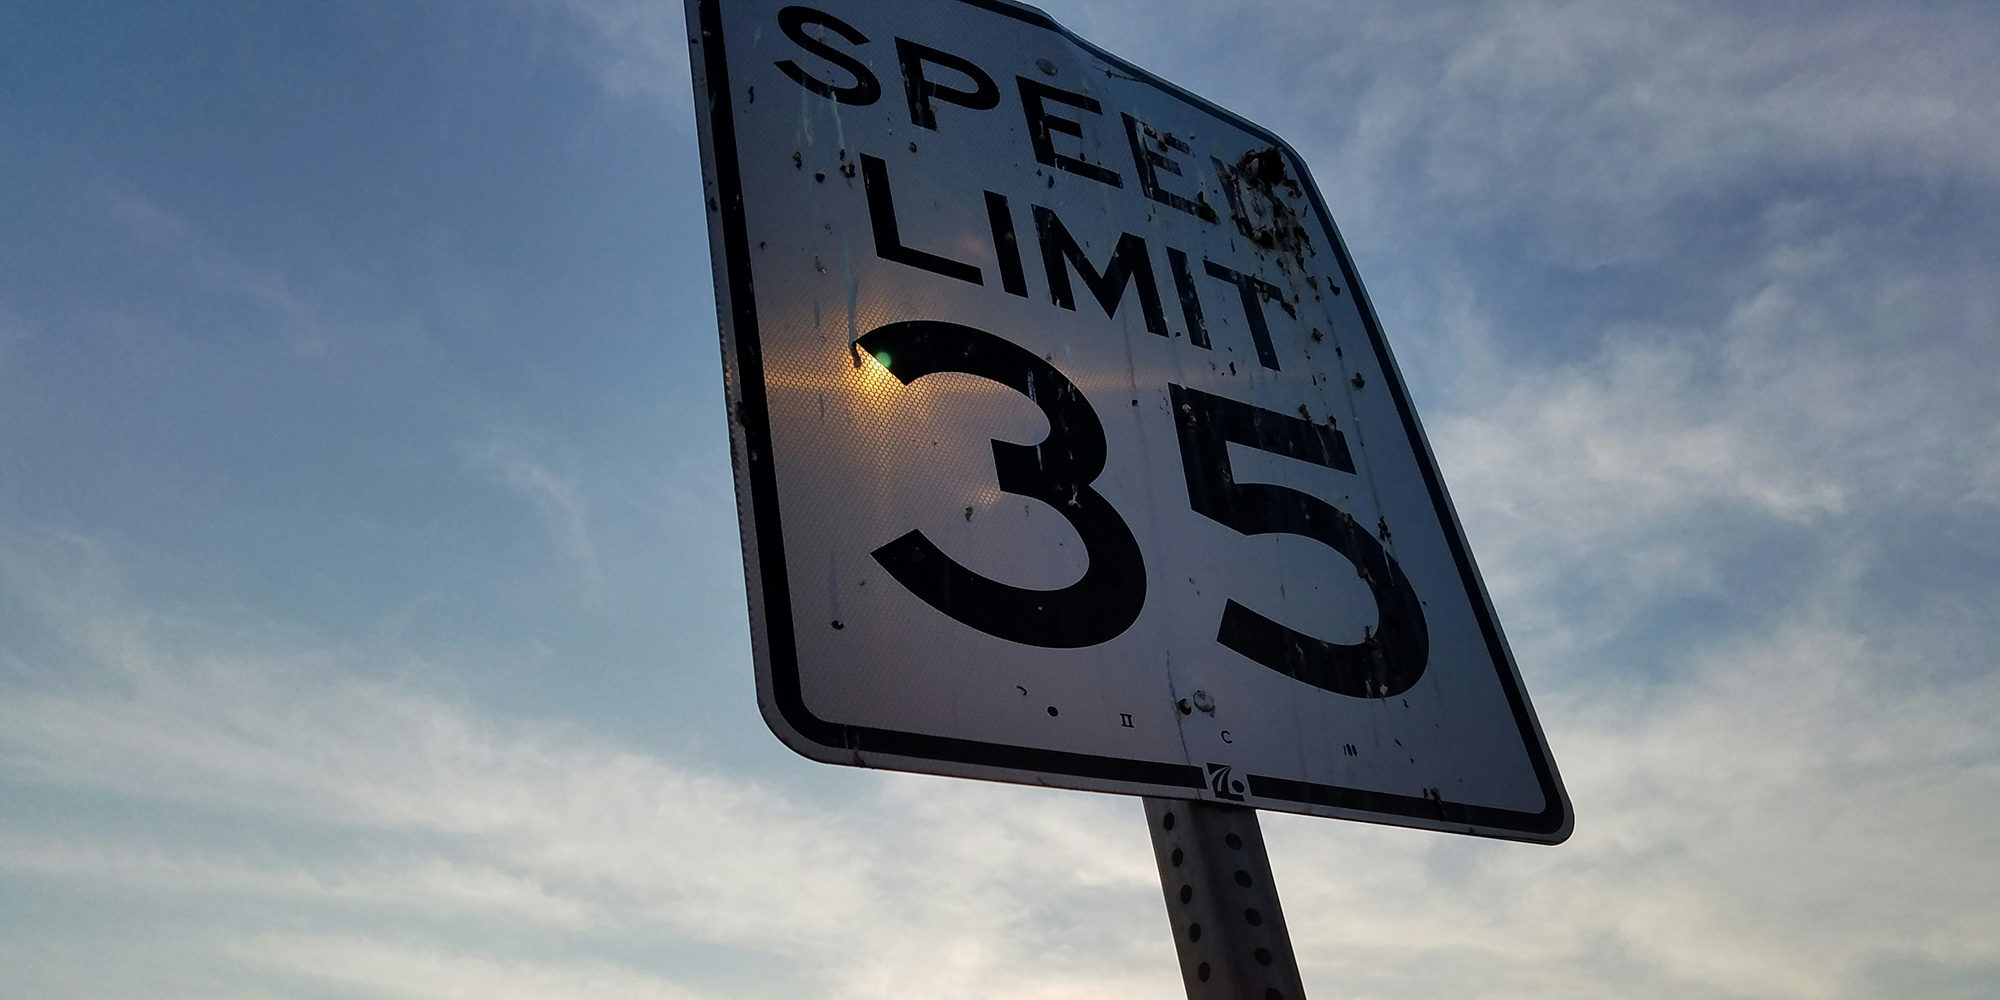 speed limit 35 sign